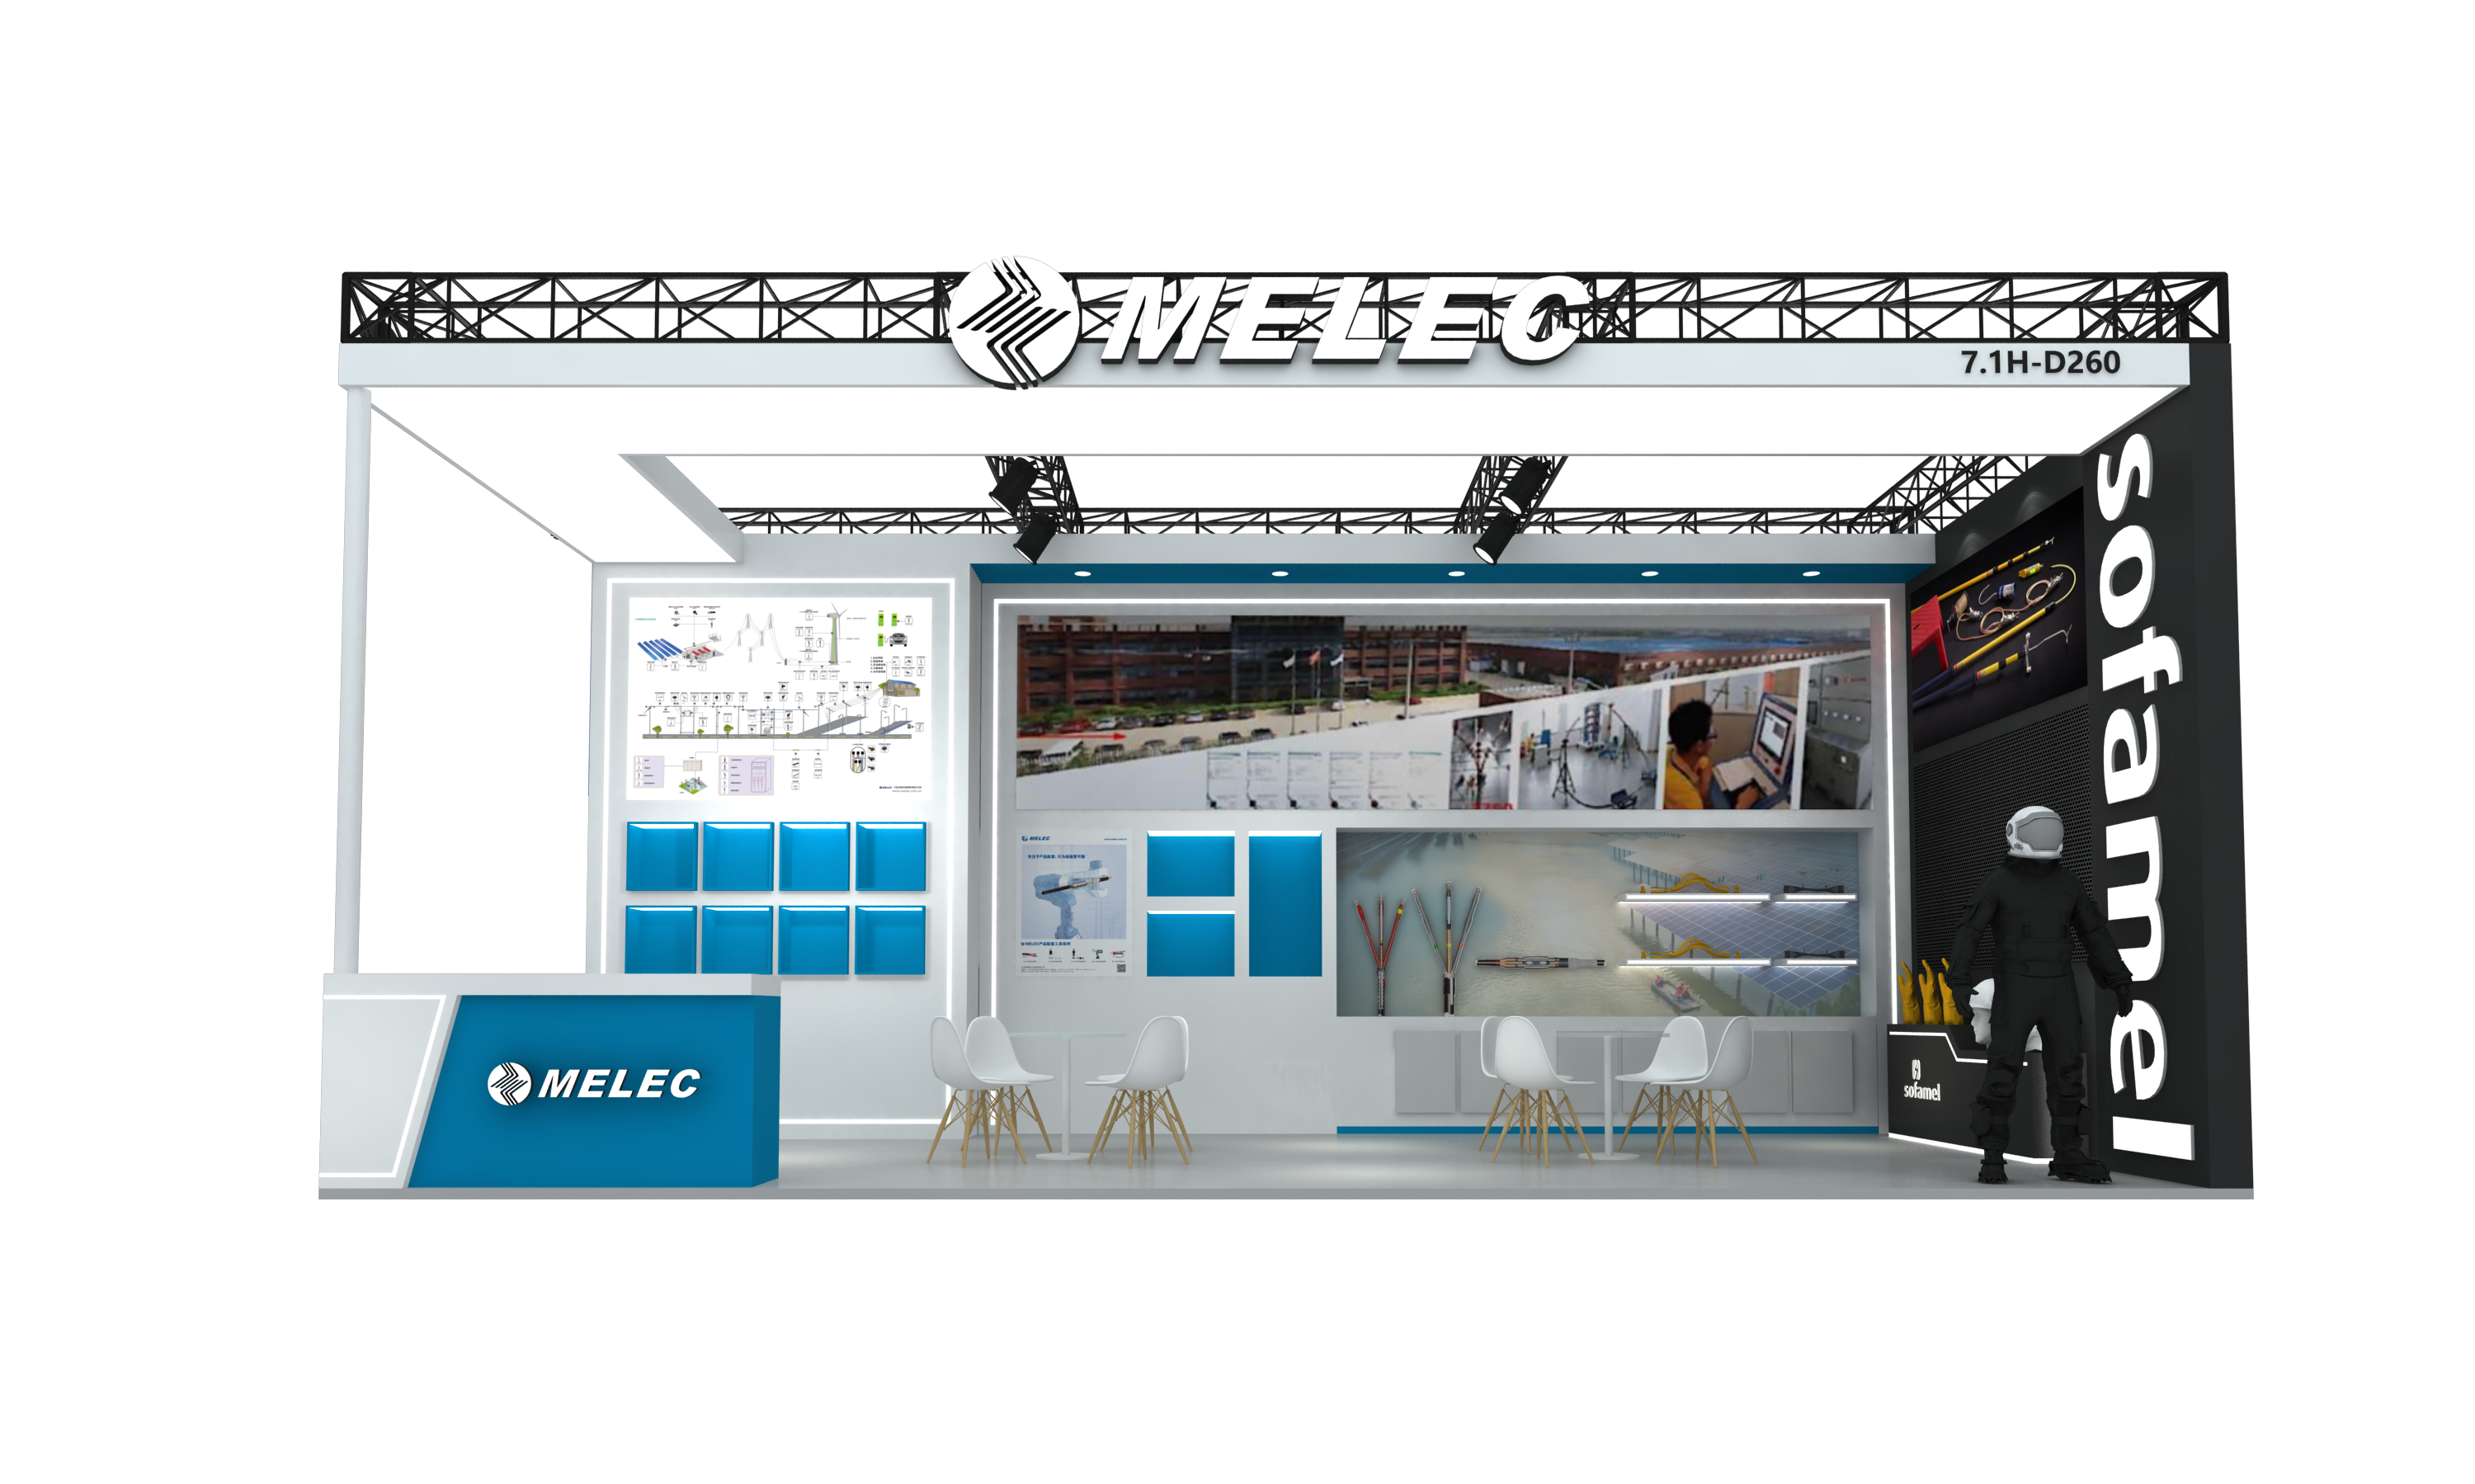 MELEC 17th SNEC PV POWER EXPO